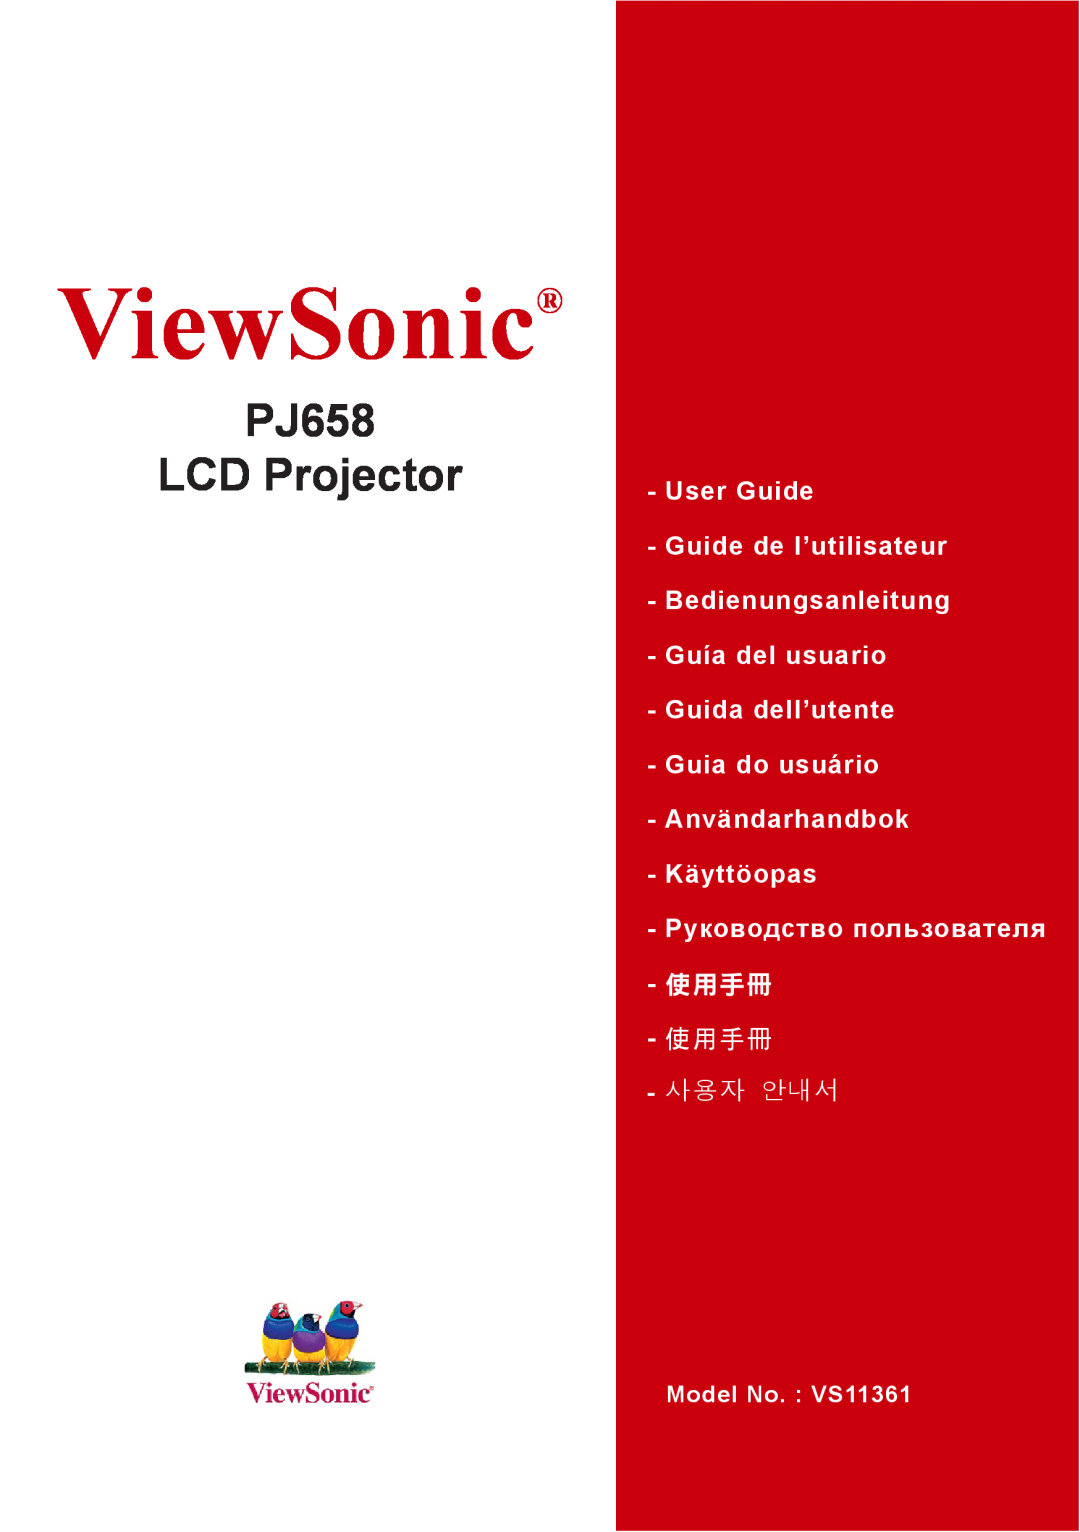 ViewSonic VS11361 manual ViewSonic, PJ658 LCD Projector, User Guide Guide de l’utilisateur, 使用手冊 使用手冊, 사용자 안내서 